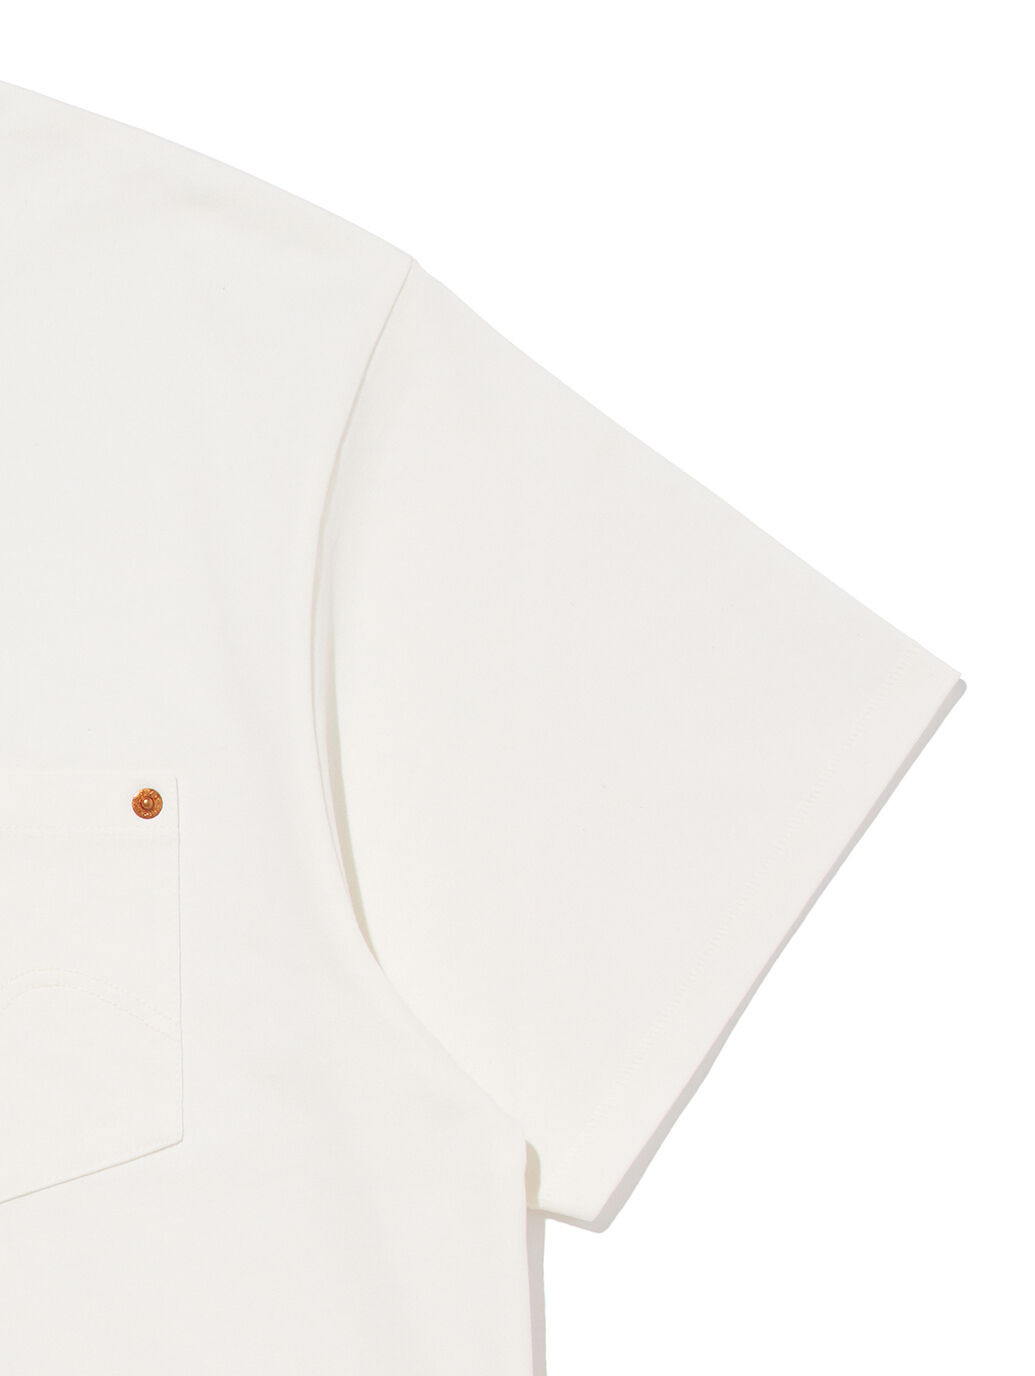 KENZO x LEVI'S® Tシャツ ホワイト｜リーバイス® 公式通販